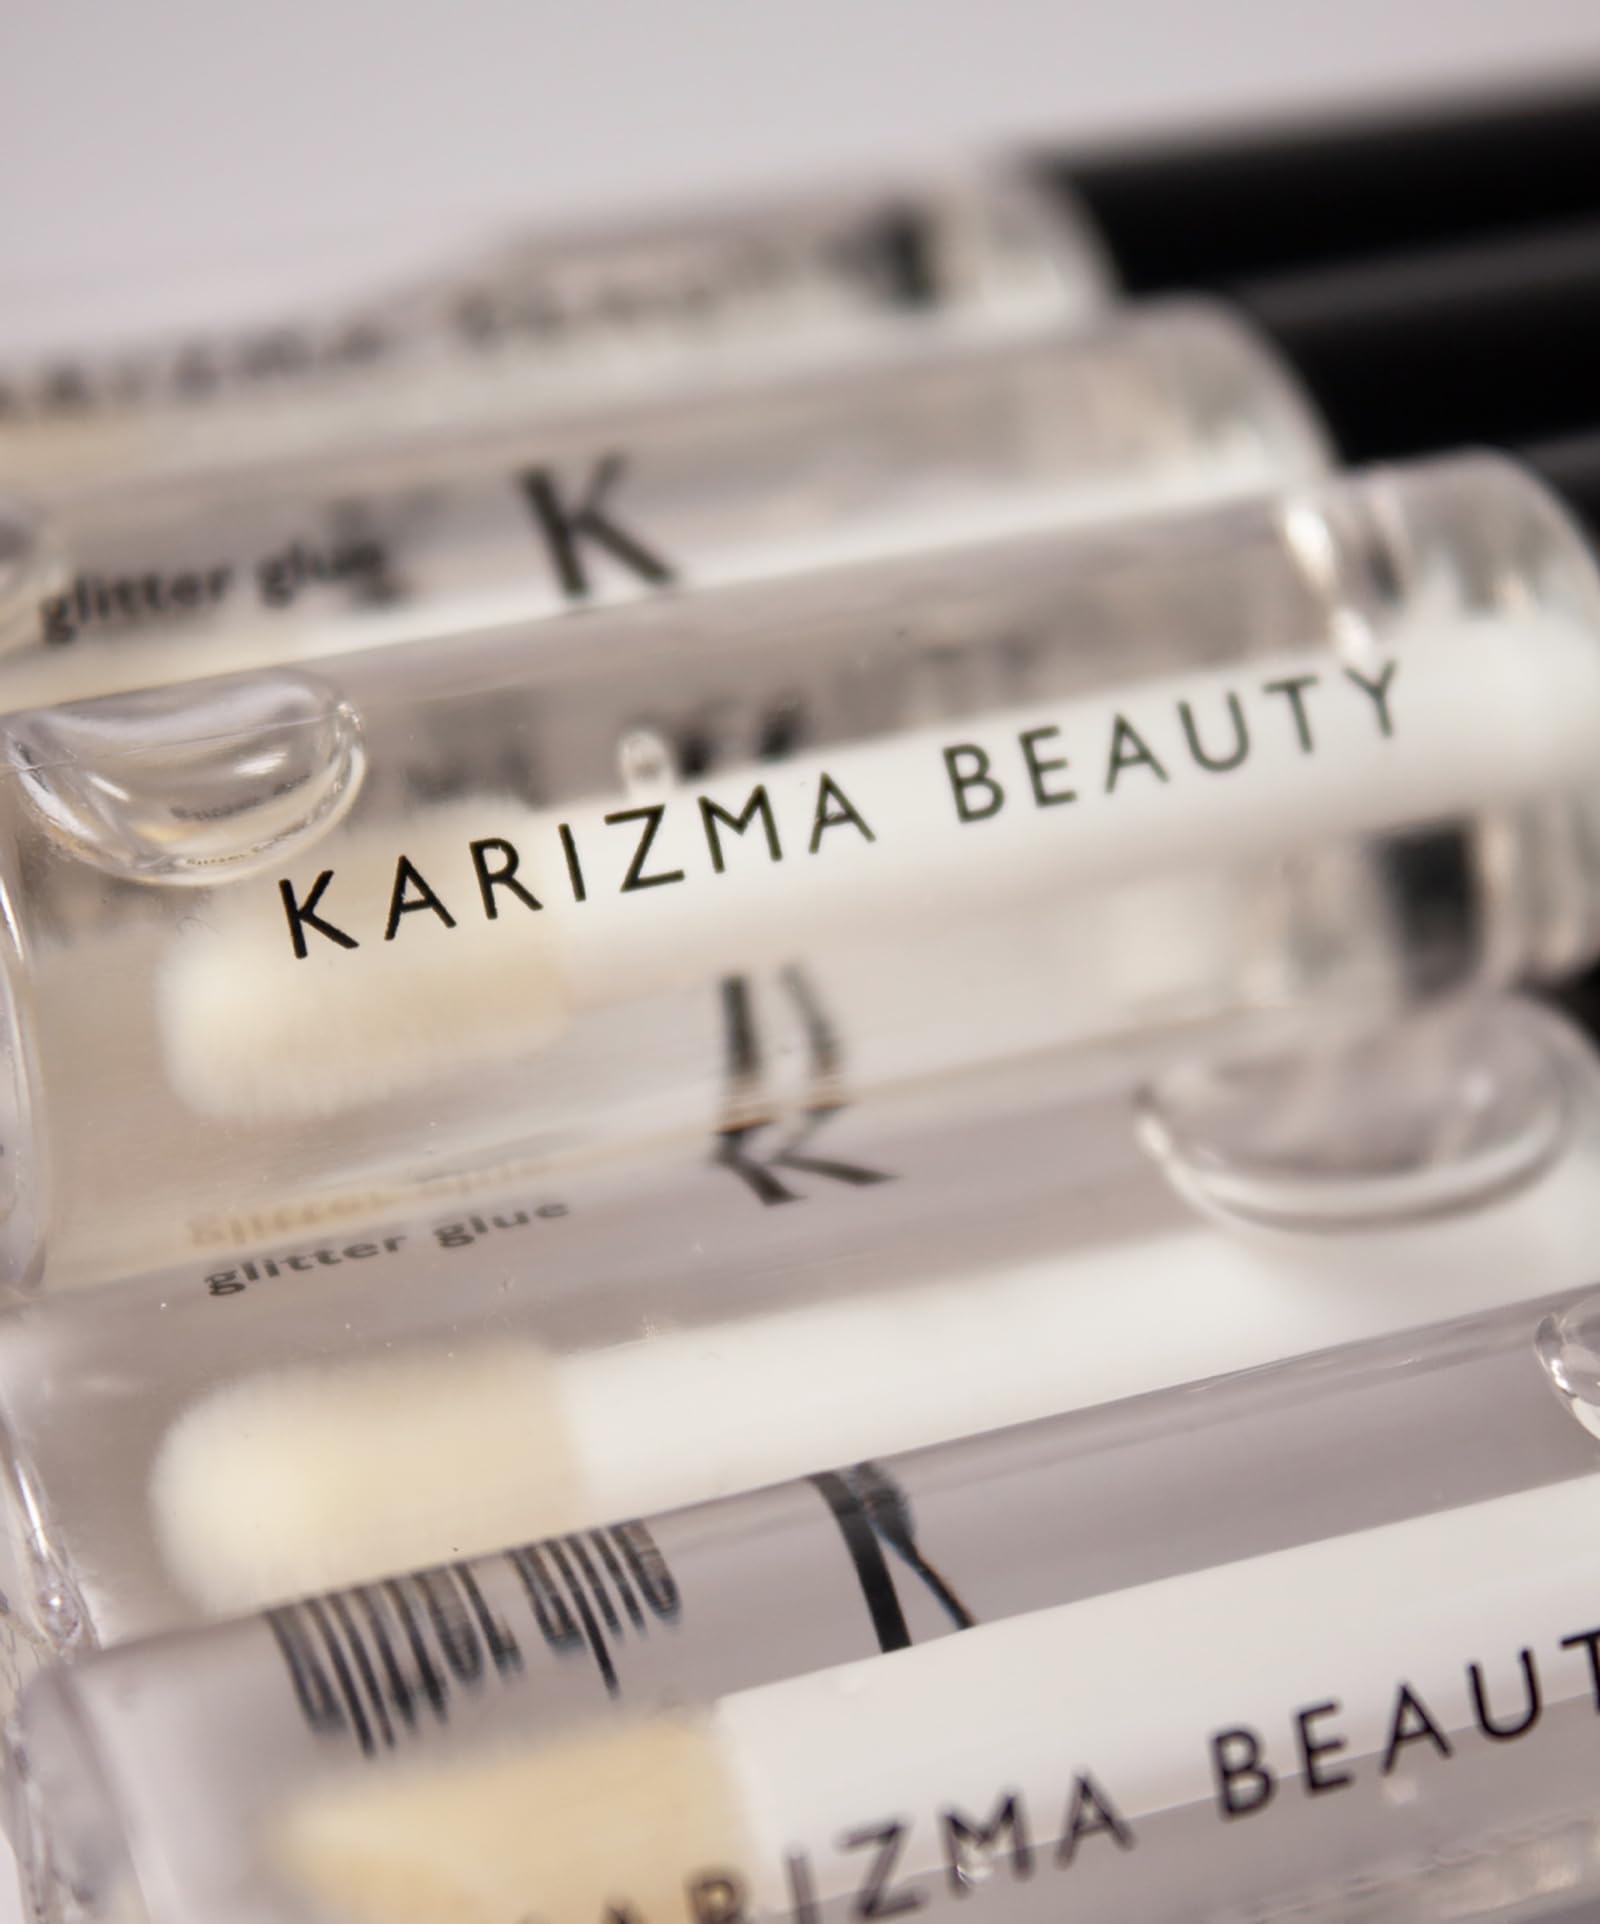 Cosmetic Glitter Glue // The Original Peel Off Formula ✮ KARIZMA Beauty ✮ Face Chunky Glitter Glue Adhesive Body Cosmetic Makeup Glitter Primer